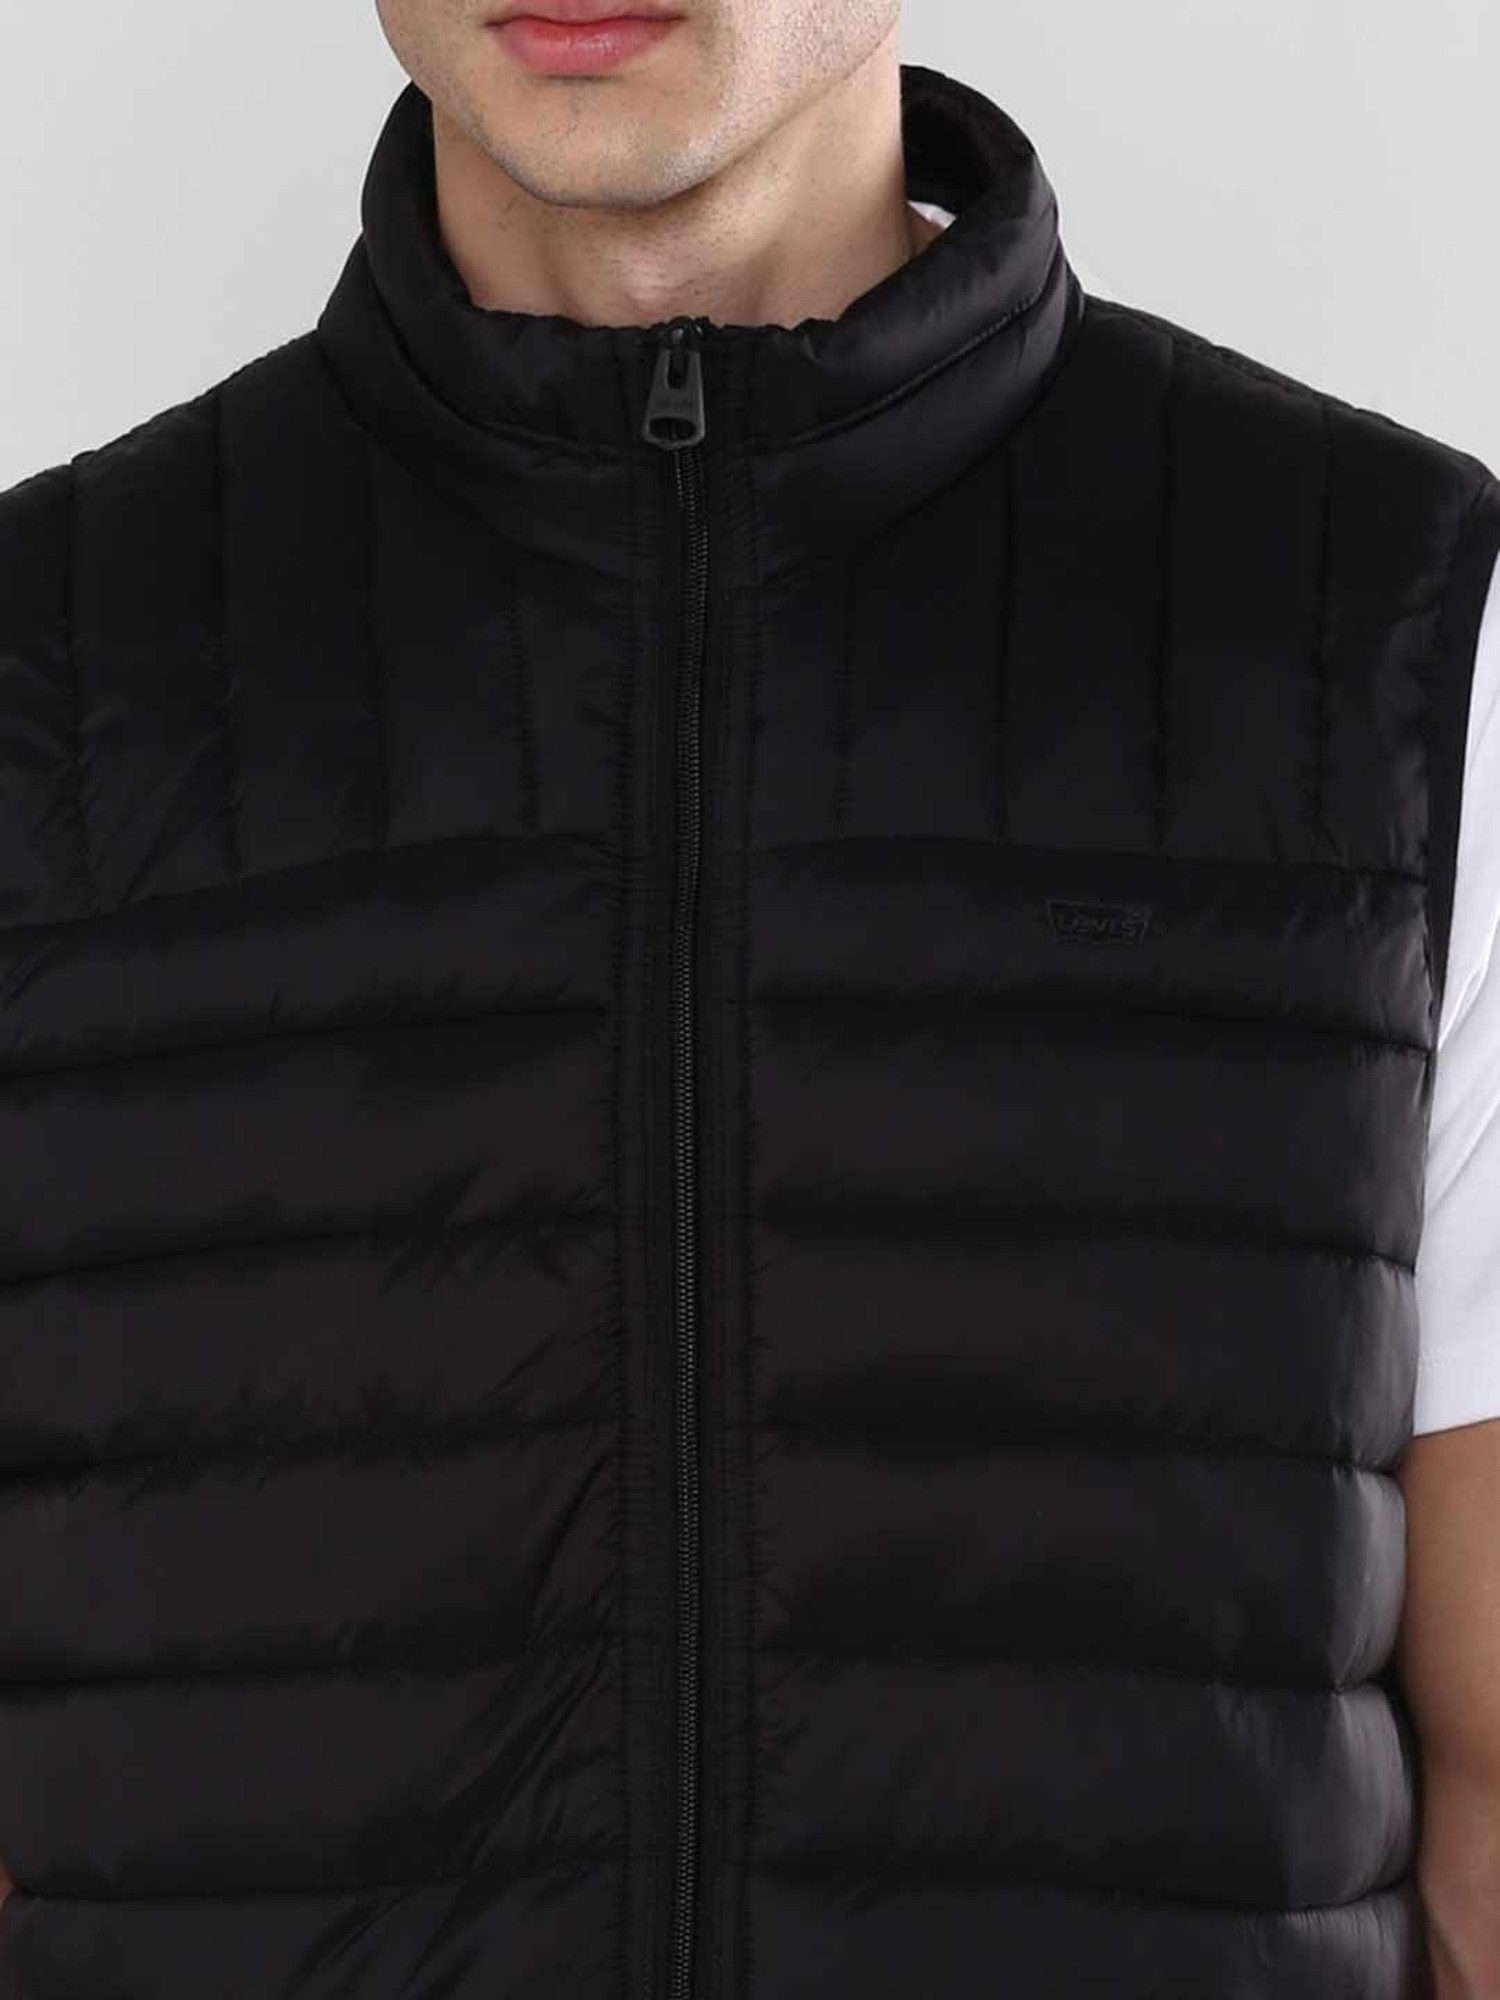 Buy Levi's Black Sleeveless Regular Fit Jacket for Men Online @ Tata CLiQ